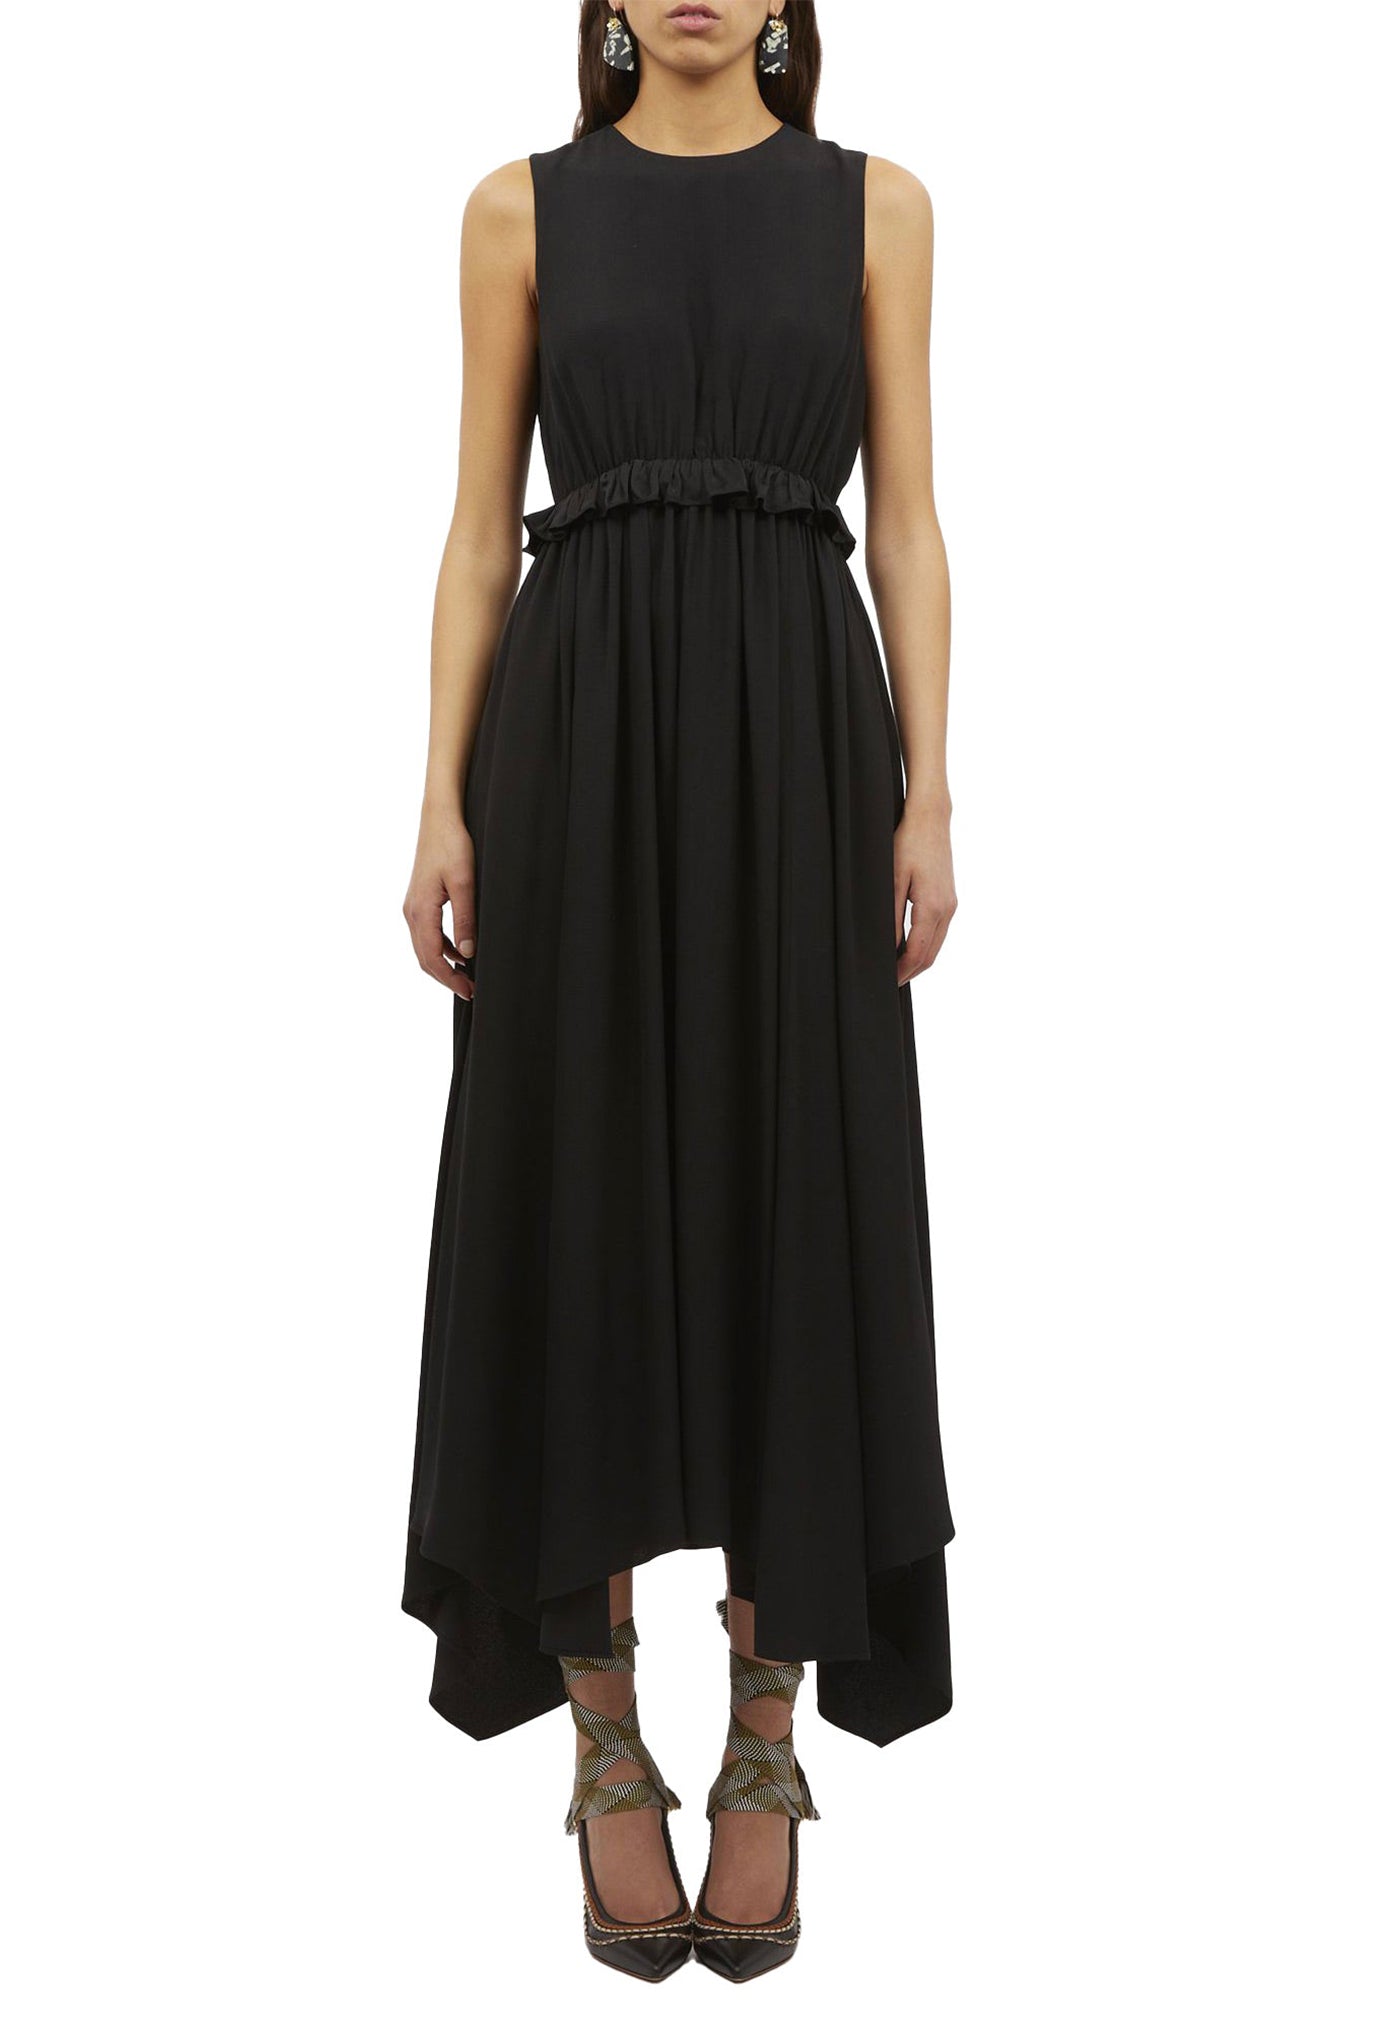 Evita Dress - Noir sold by Angel Divine